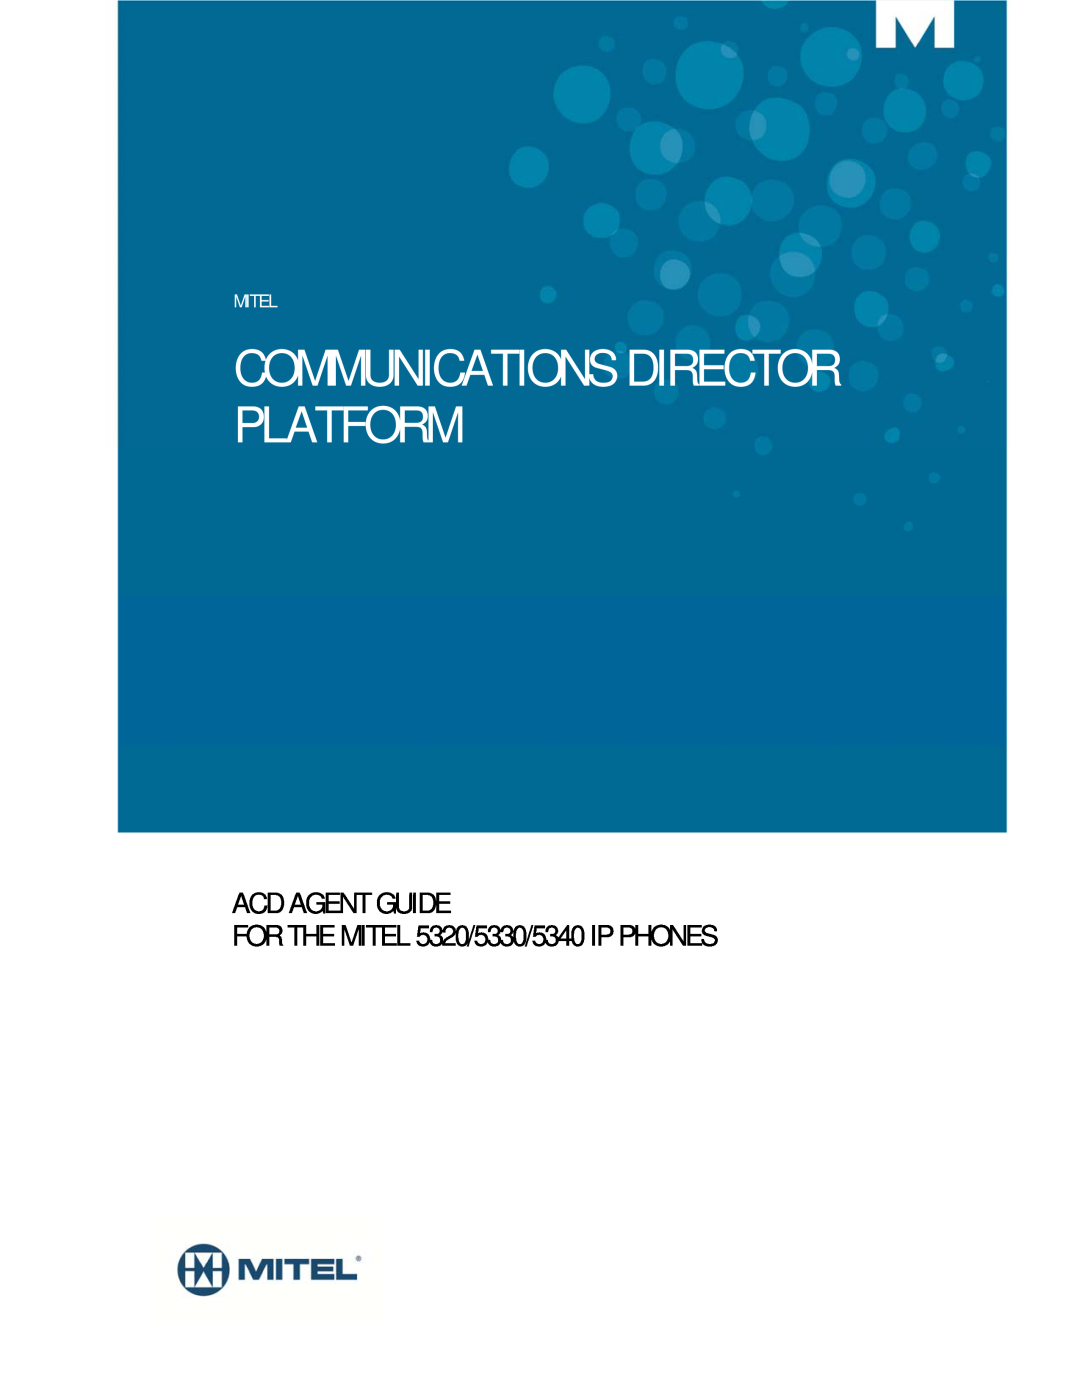 Mitel manual Communications Director Platform, MITEL 5330 AND 5340 IP PHONES USER GUIDE, Mitel 